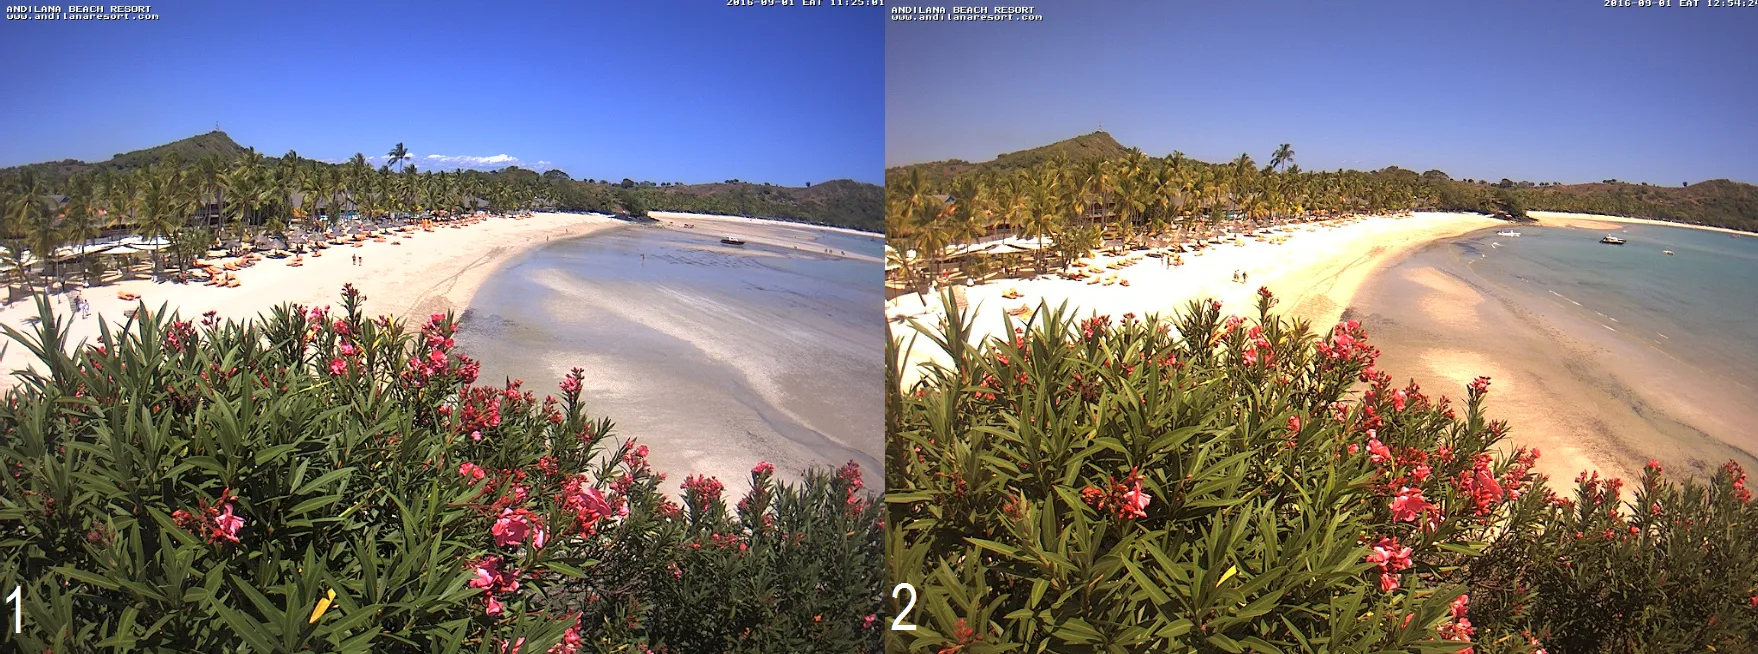 Andilana Beach Resort partial solar eclipse 2016 through webcam comparison 2